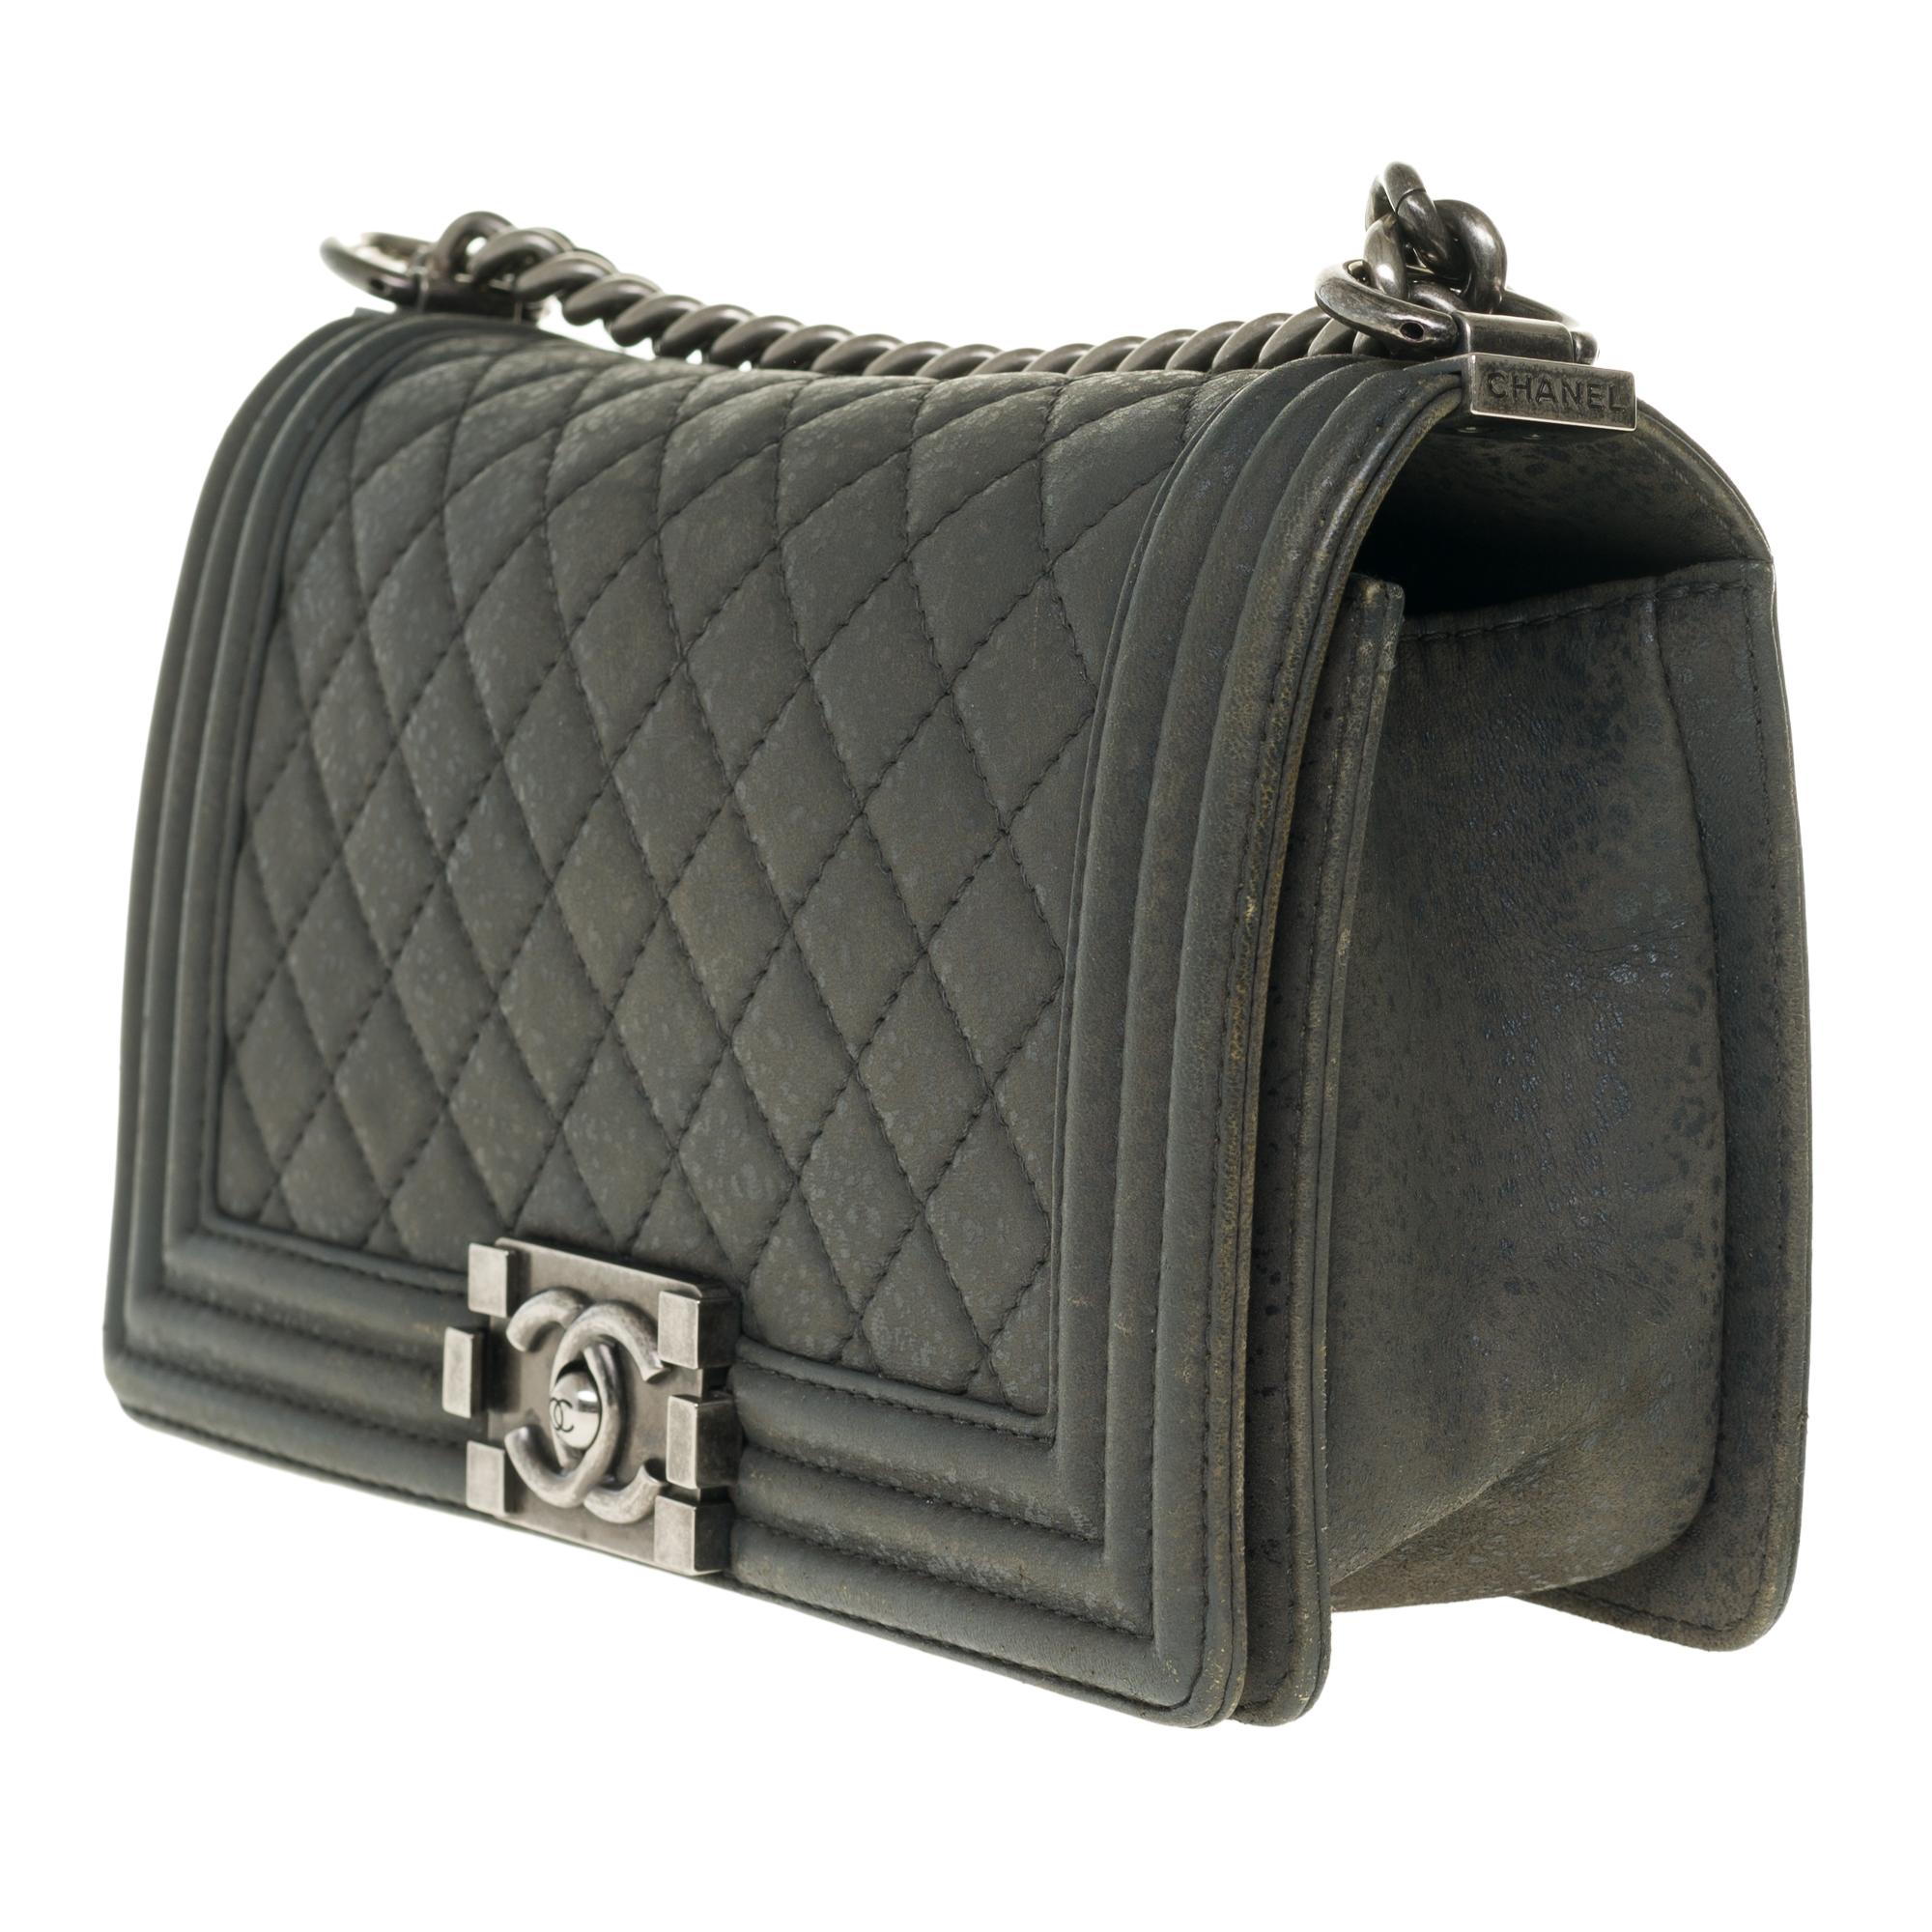 Black Chanel Boy Old medium(25cm) shoulder bag in grey aged quilted leather, SHW !